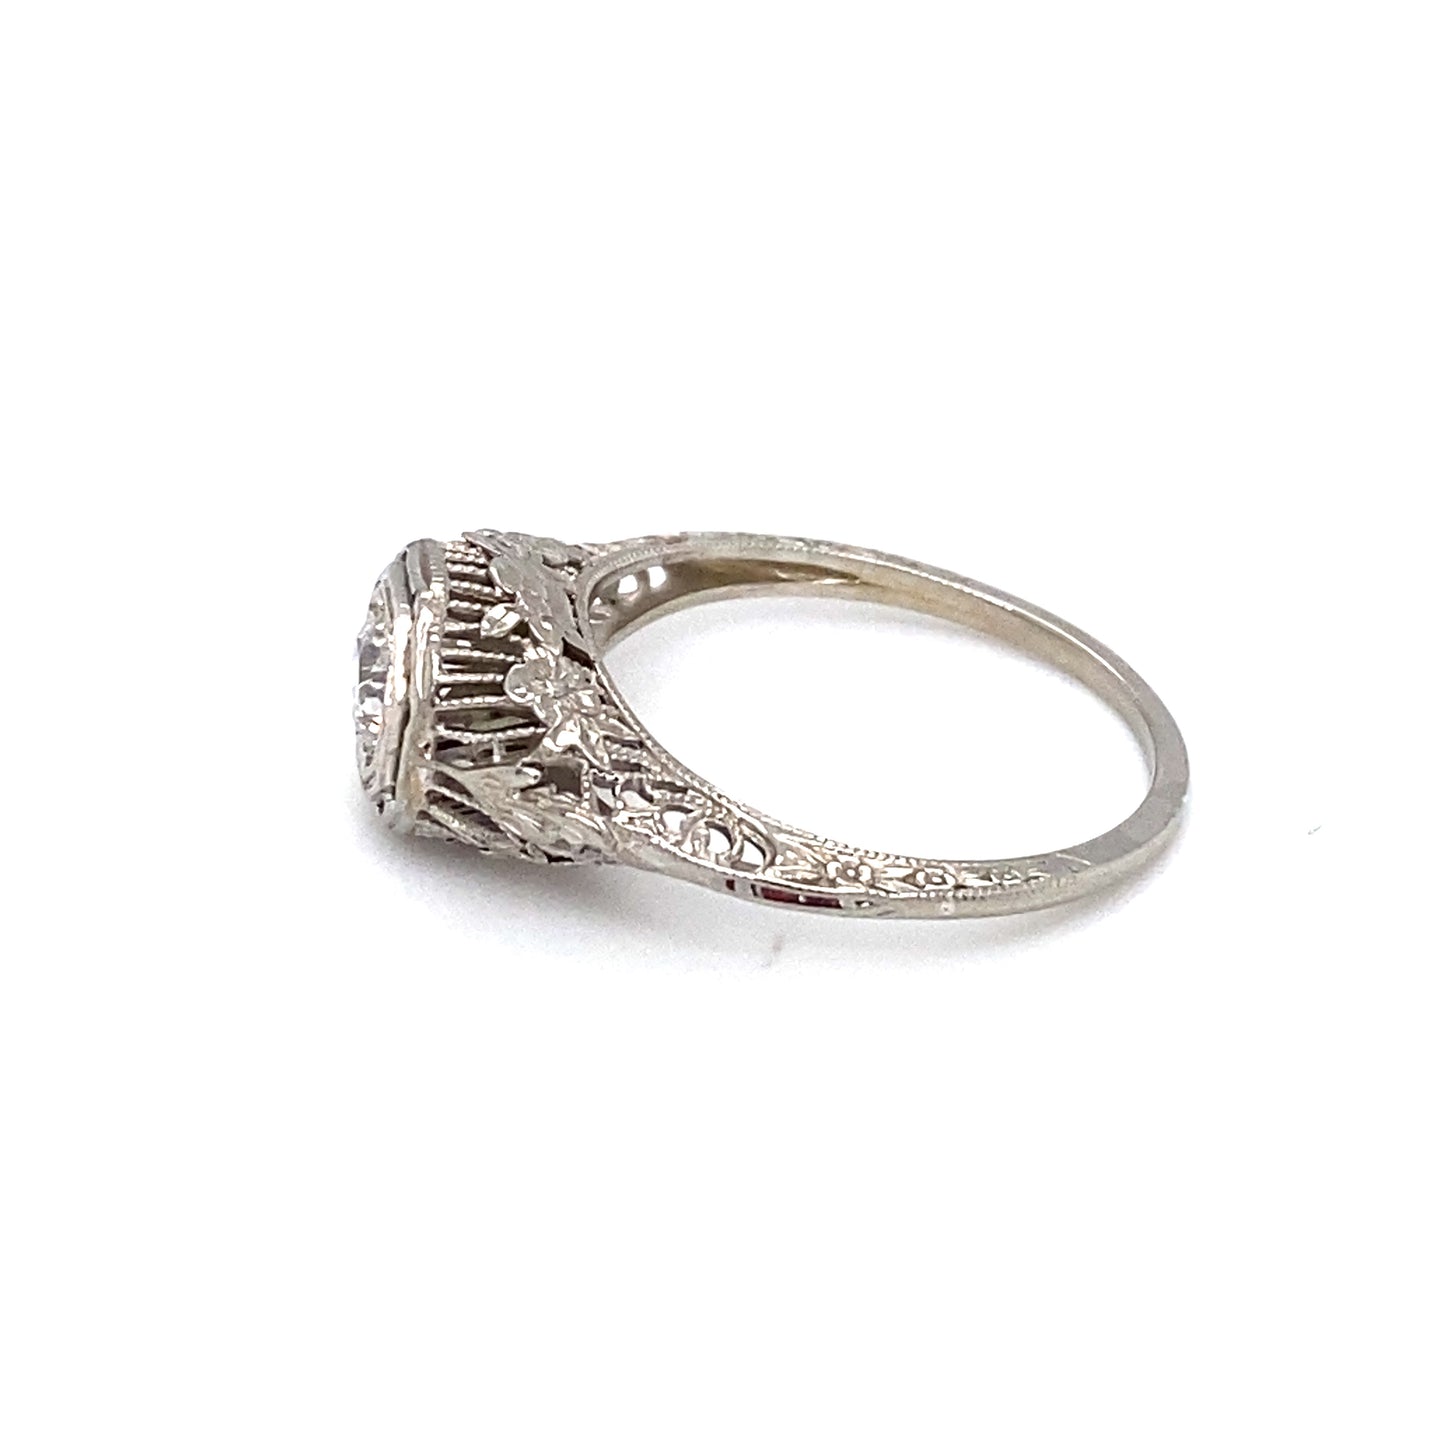 Circa 1920s Art Deco 0.35ct Diamond Ring in 18K White Gold